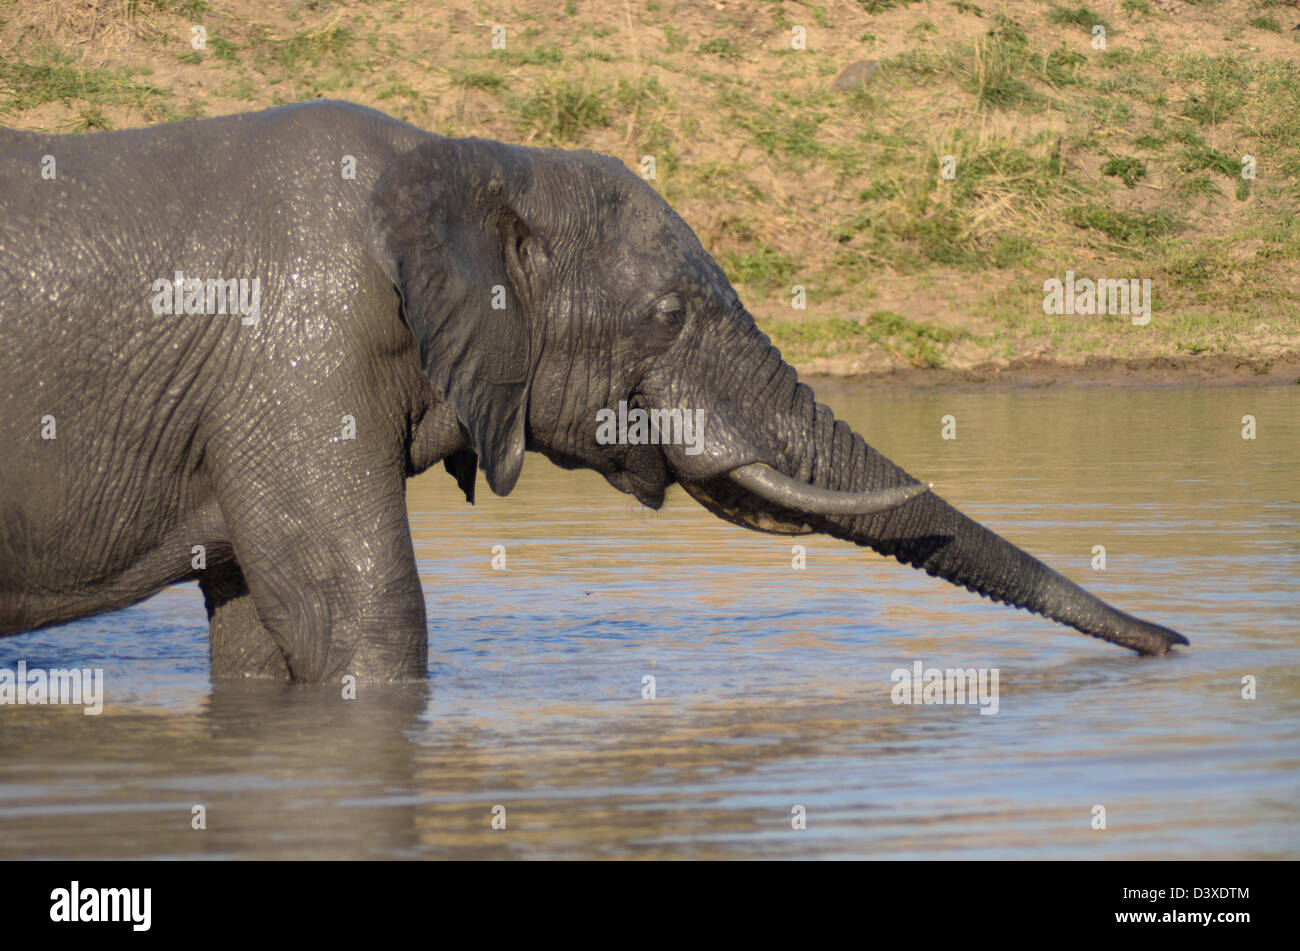 Fotos de África, los elefantes Bull estirar el tronco para beber agua Foto de stock